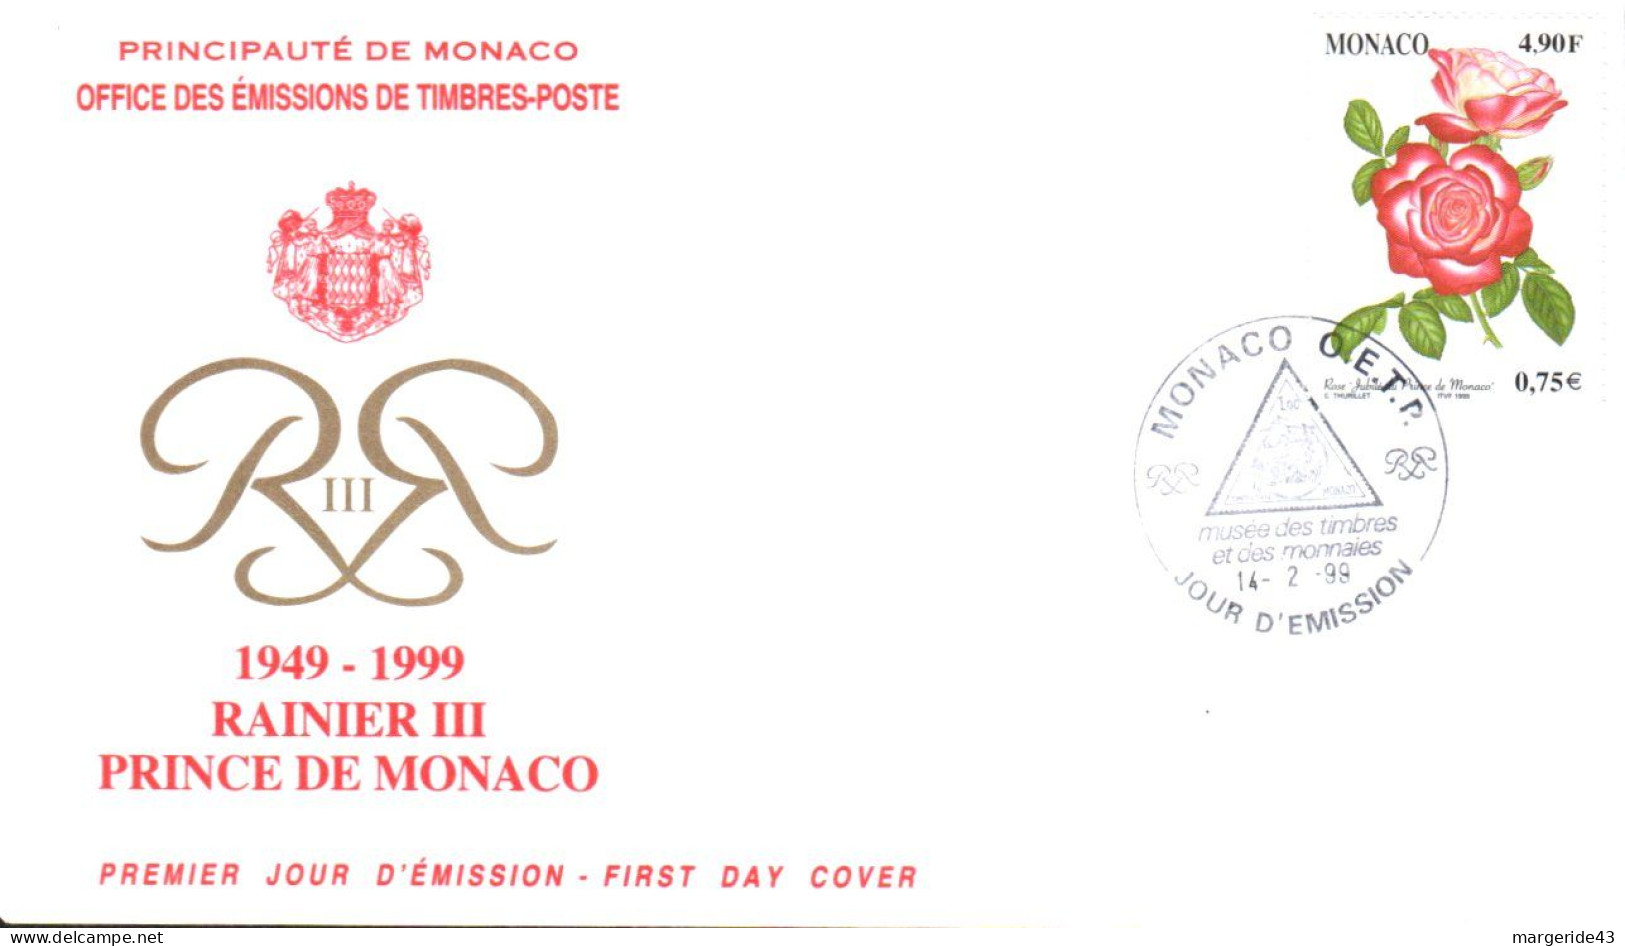 MONACO FDC 1999 ROSES - FDC